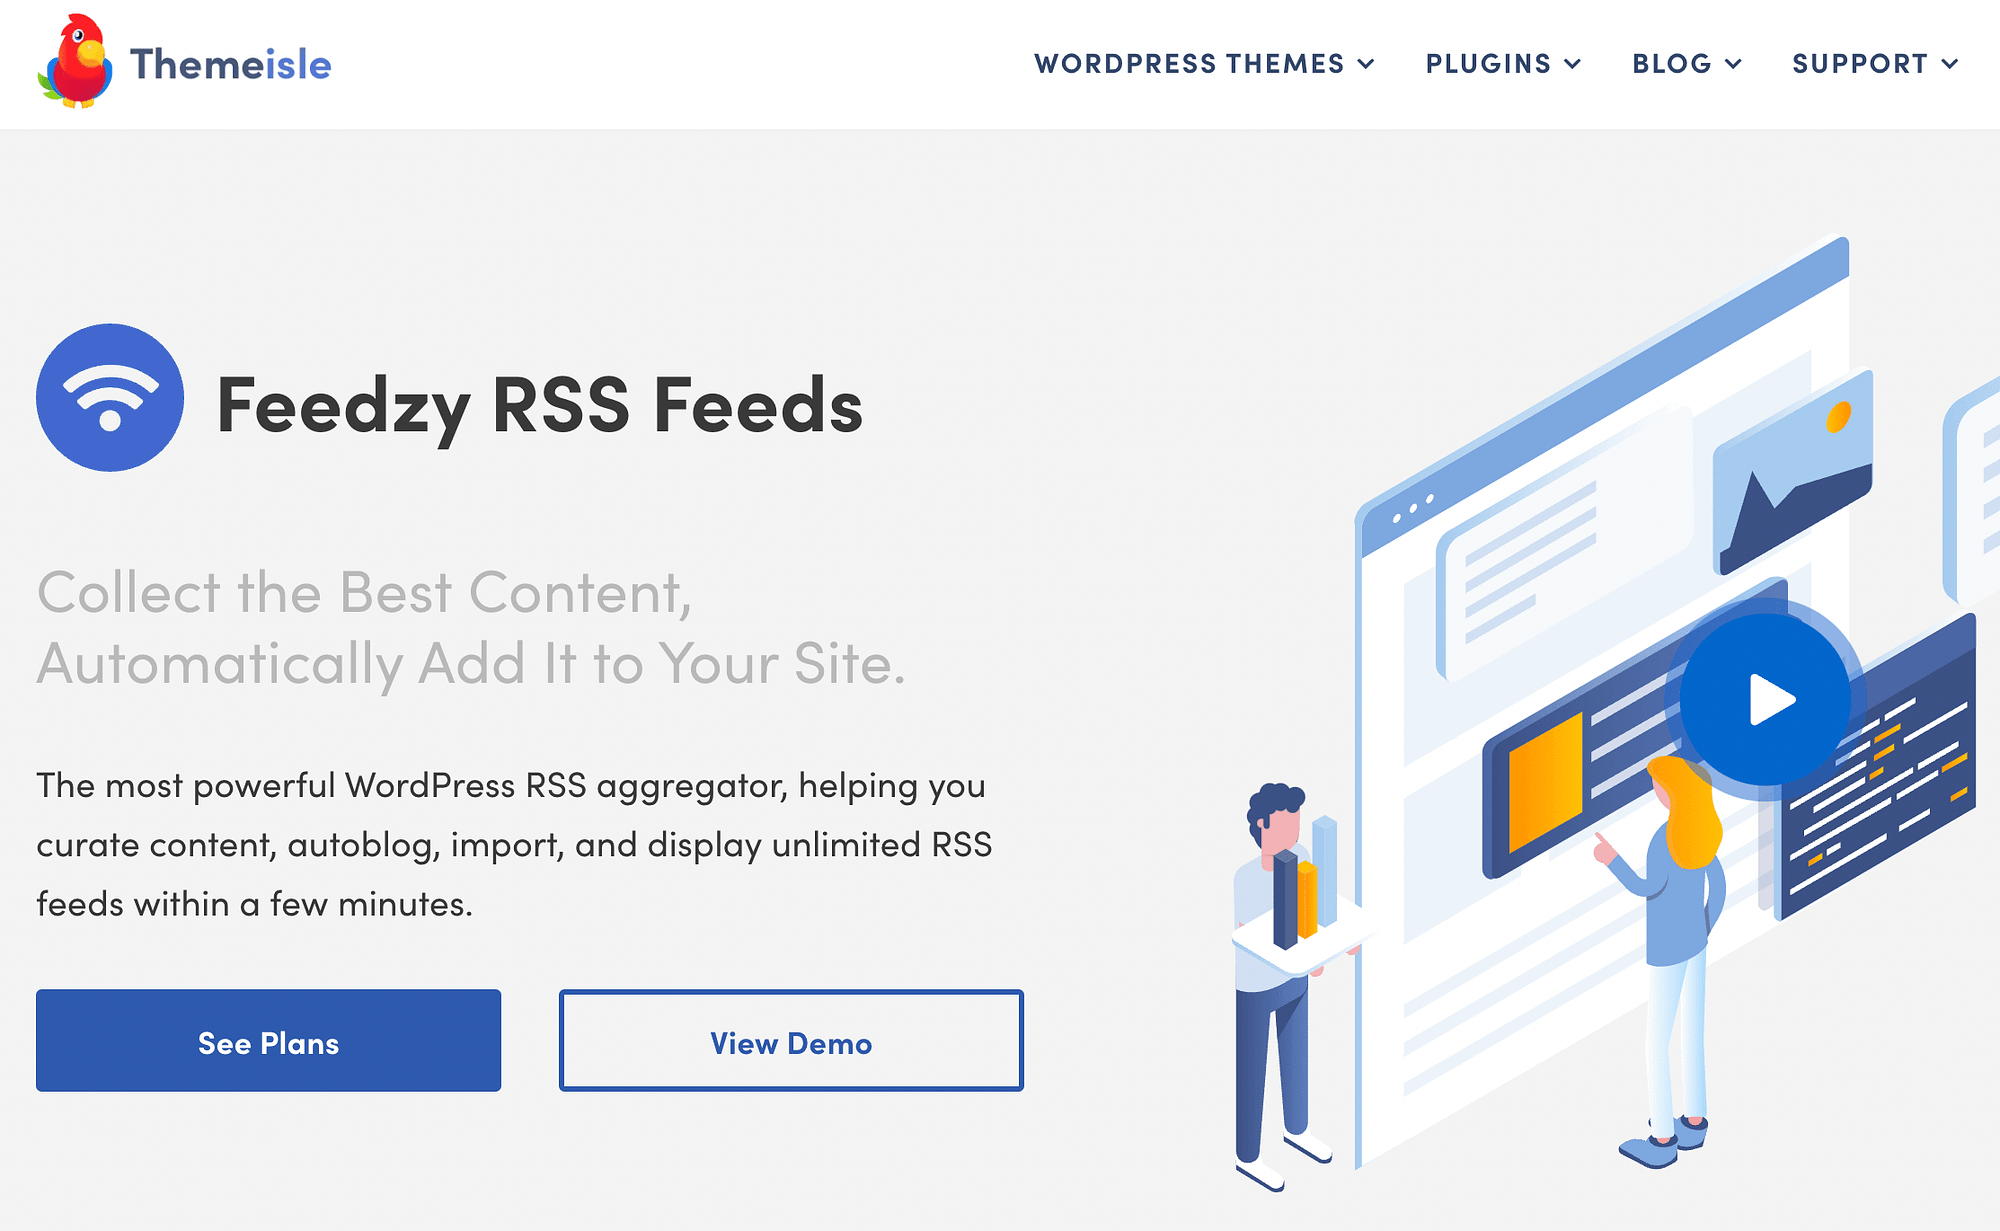 Feedzy RSS Feeds plugin